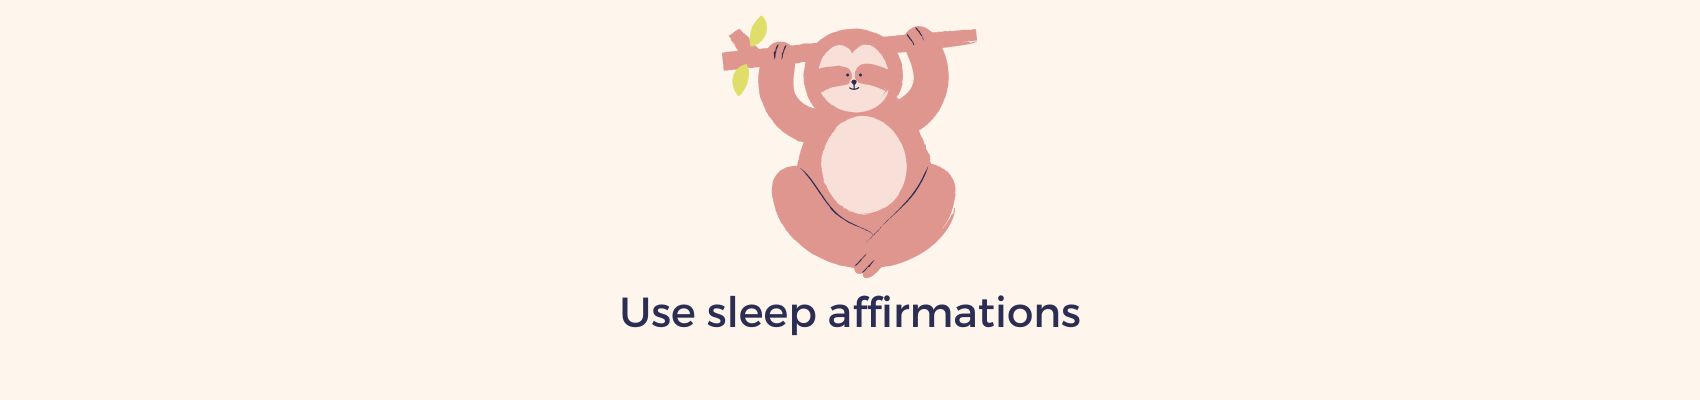 Sleep affirmations